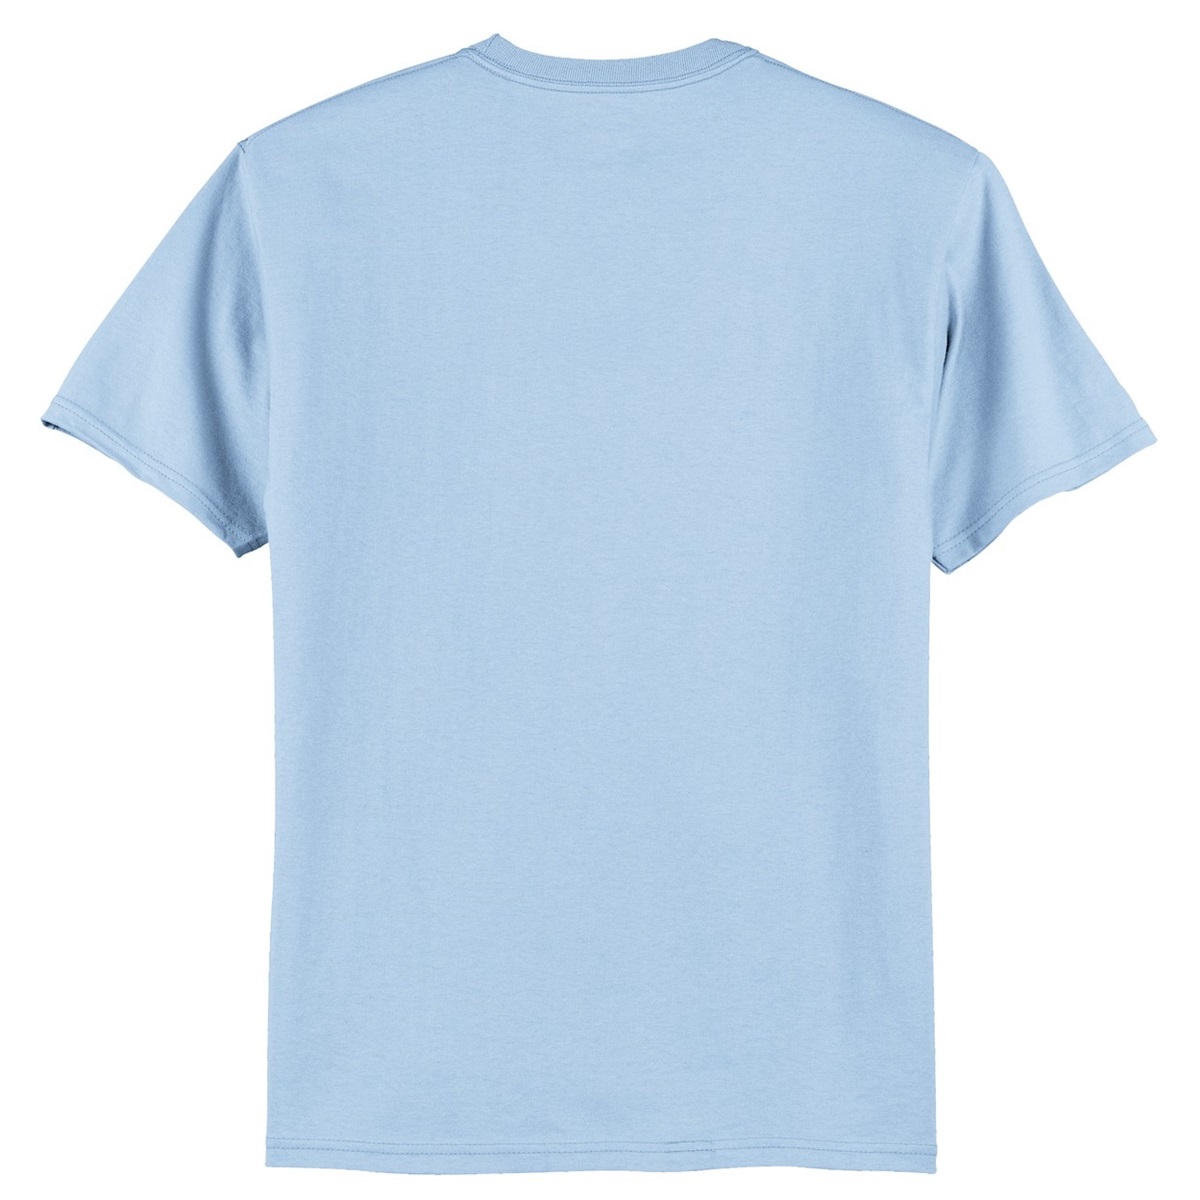 Hanes 5250 Tagless Cotton T-Shirt - Light Blue | FullSource.com